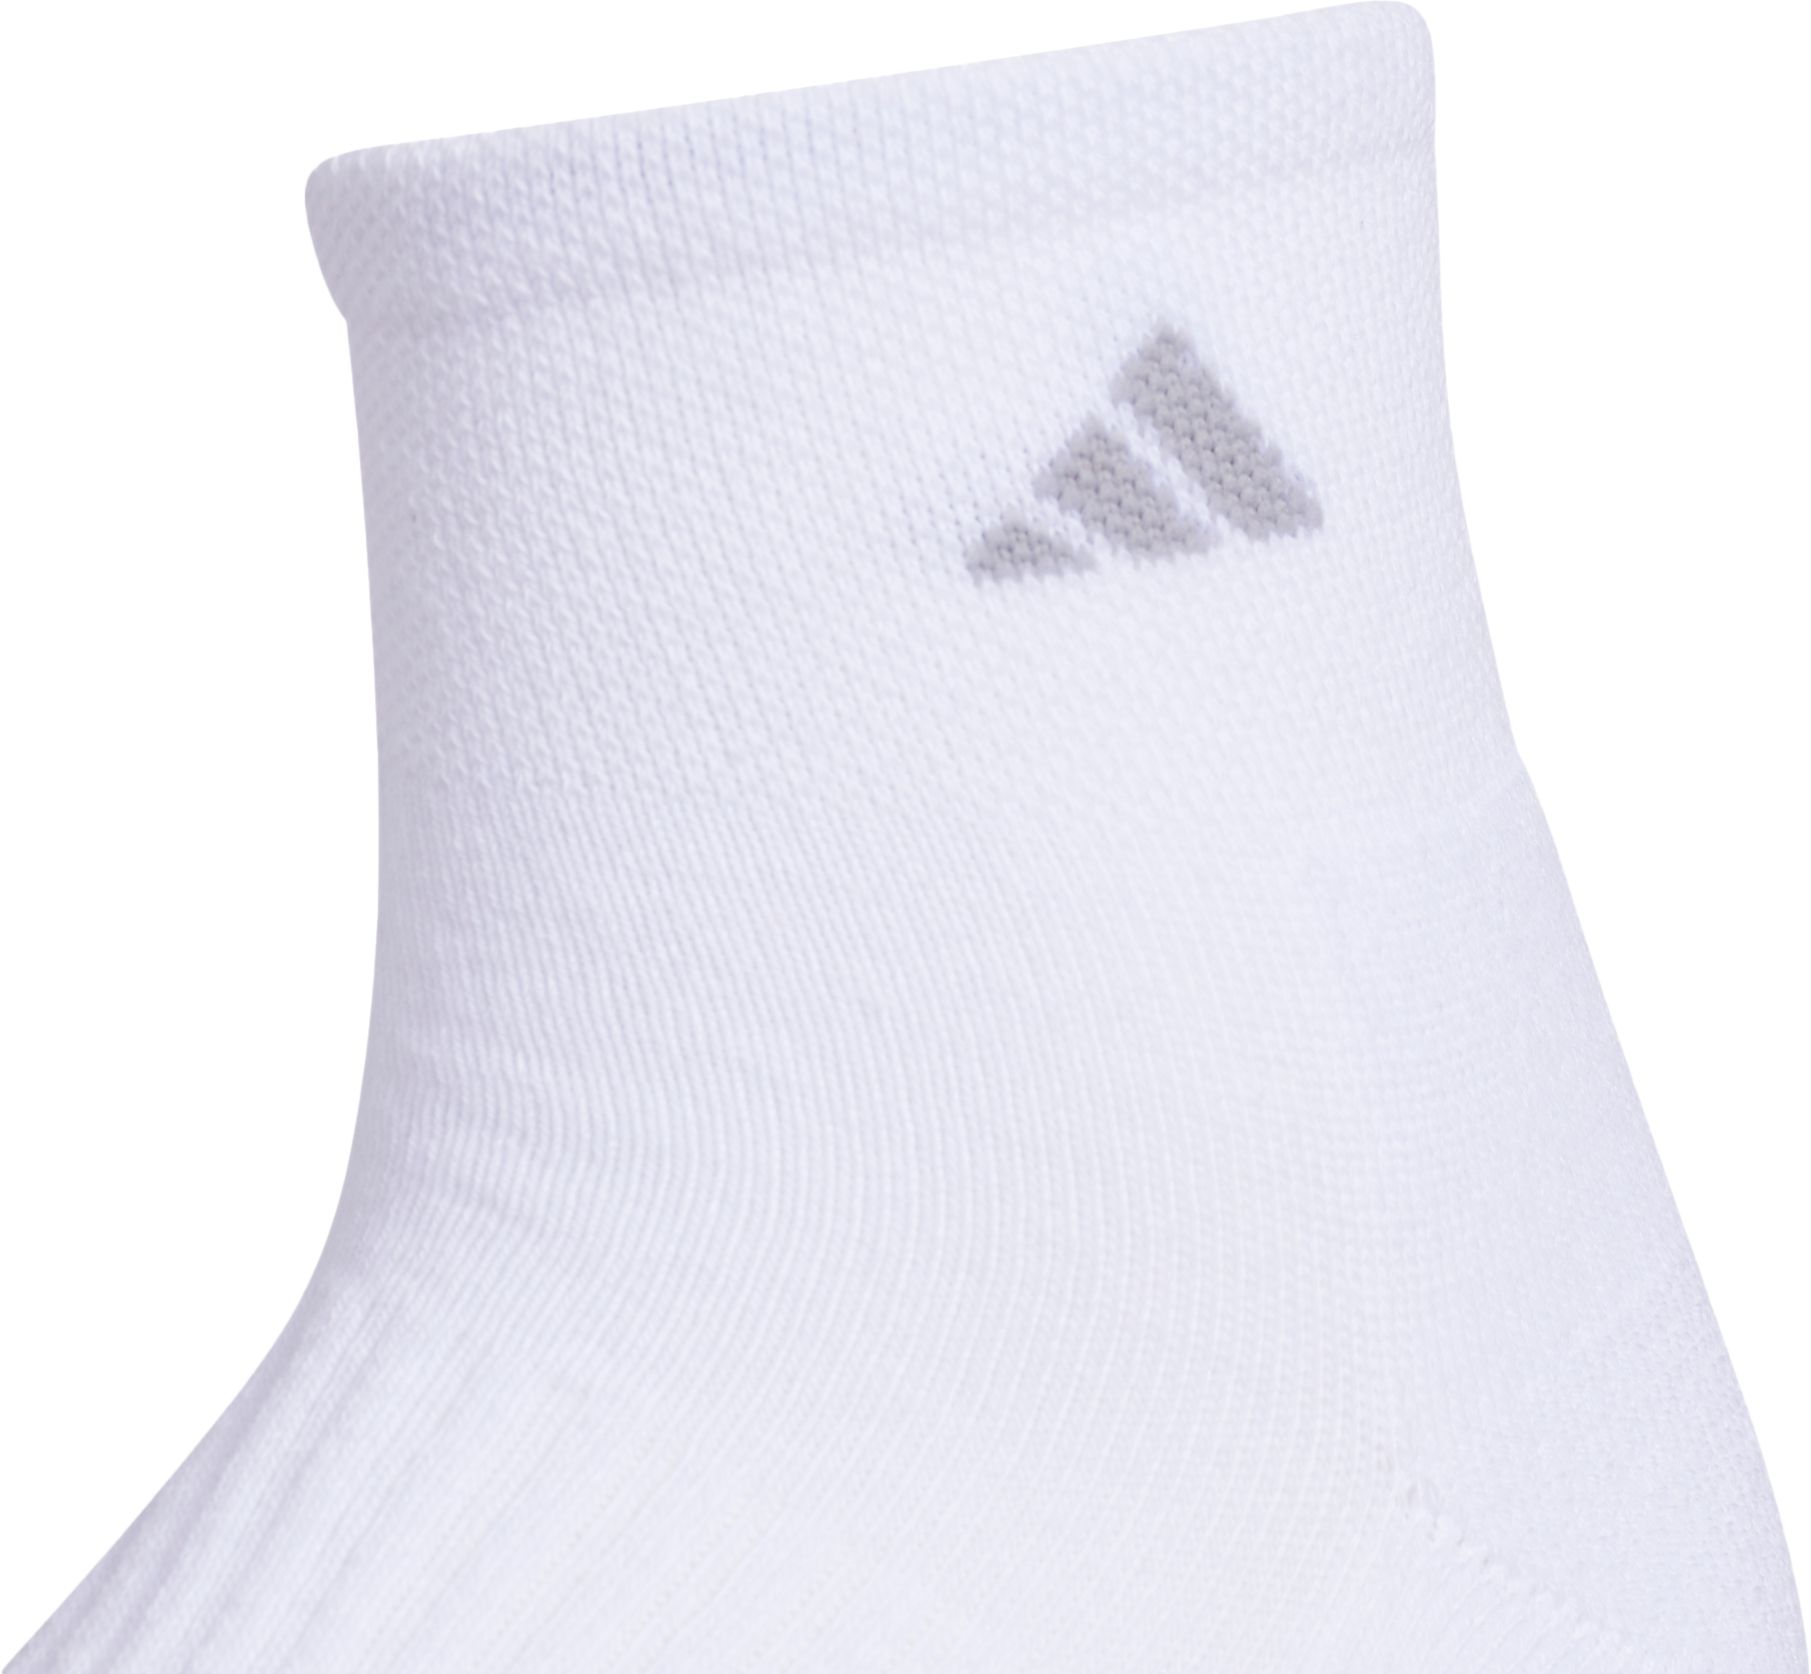 adidas Women's Cushioned Quarter Socks - 3 Pack